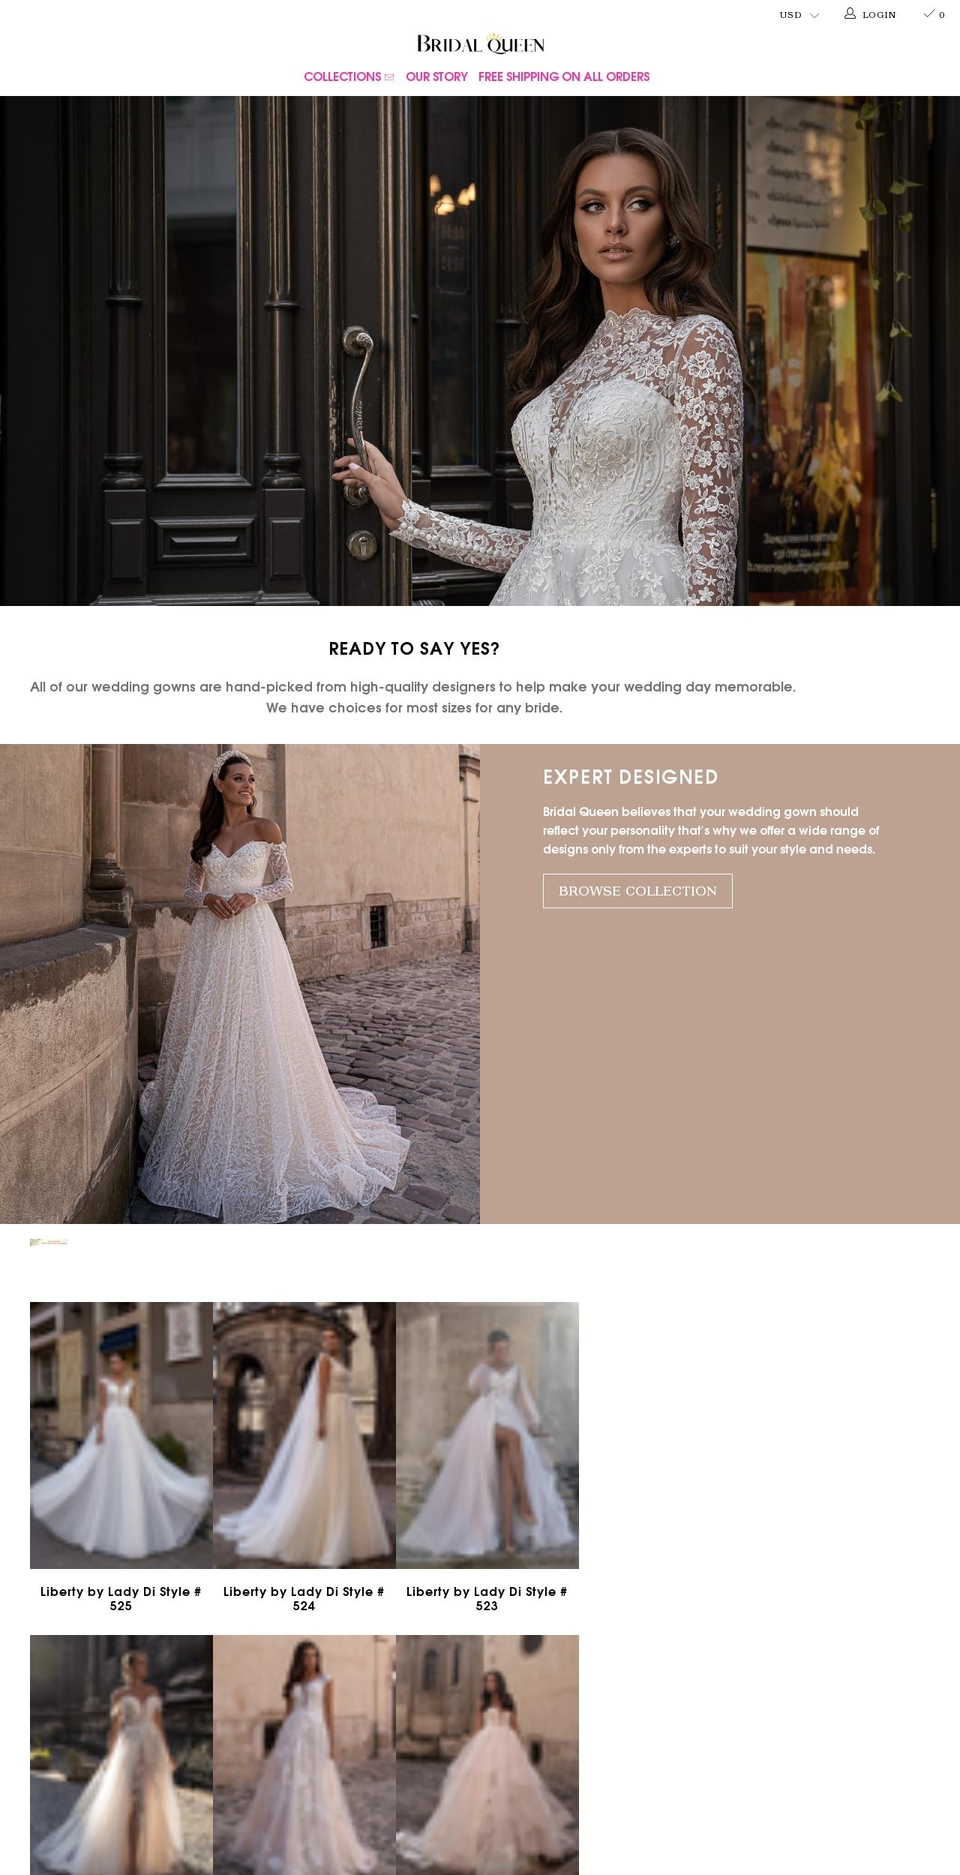 QUEEN Shopify theme site example bridal-queen.com